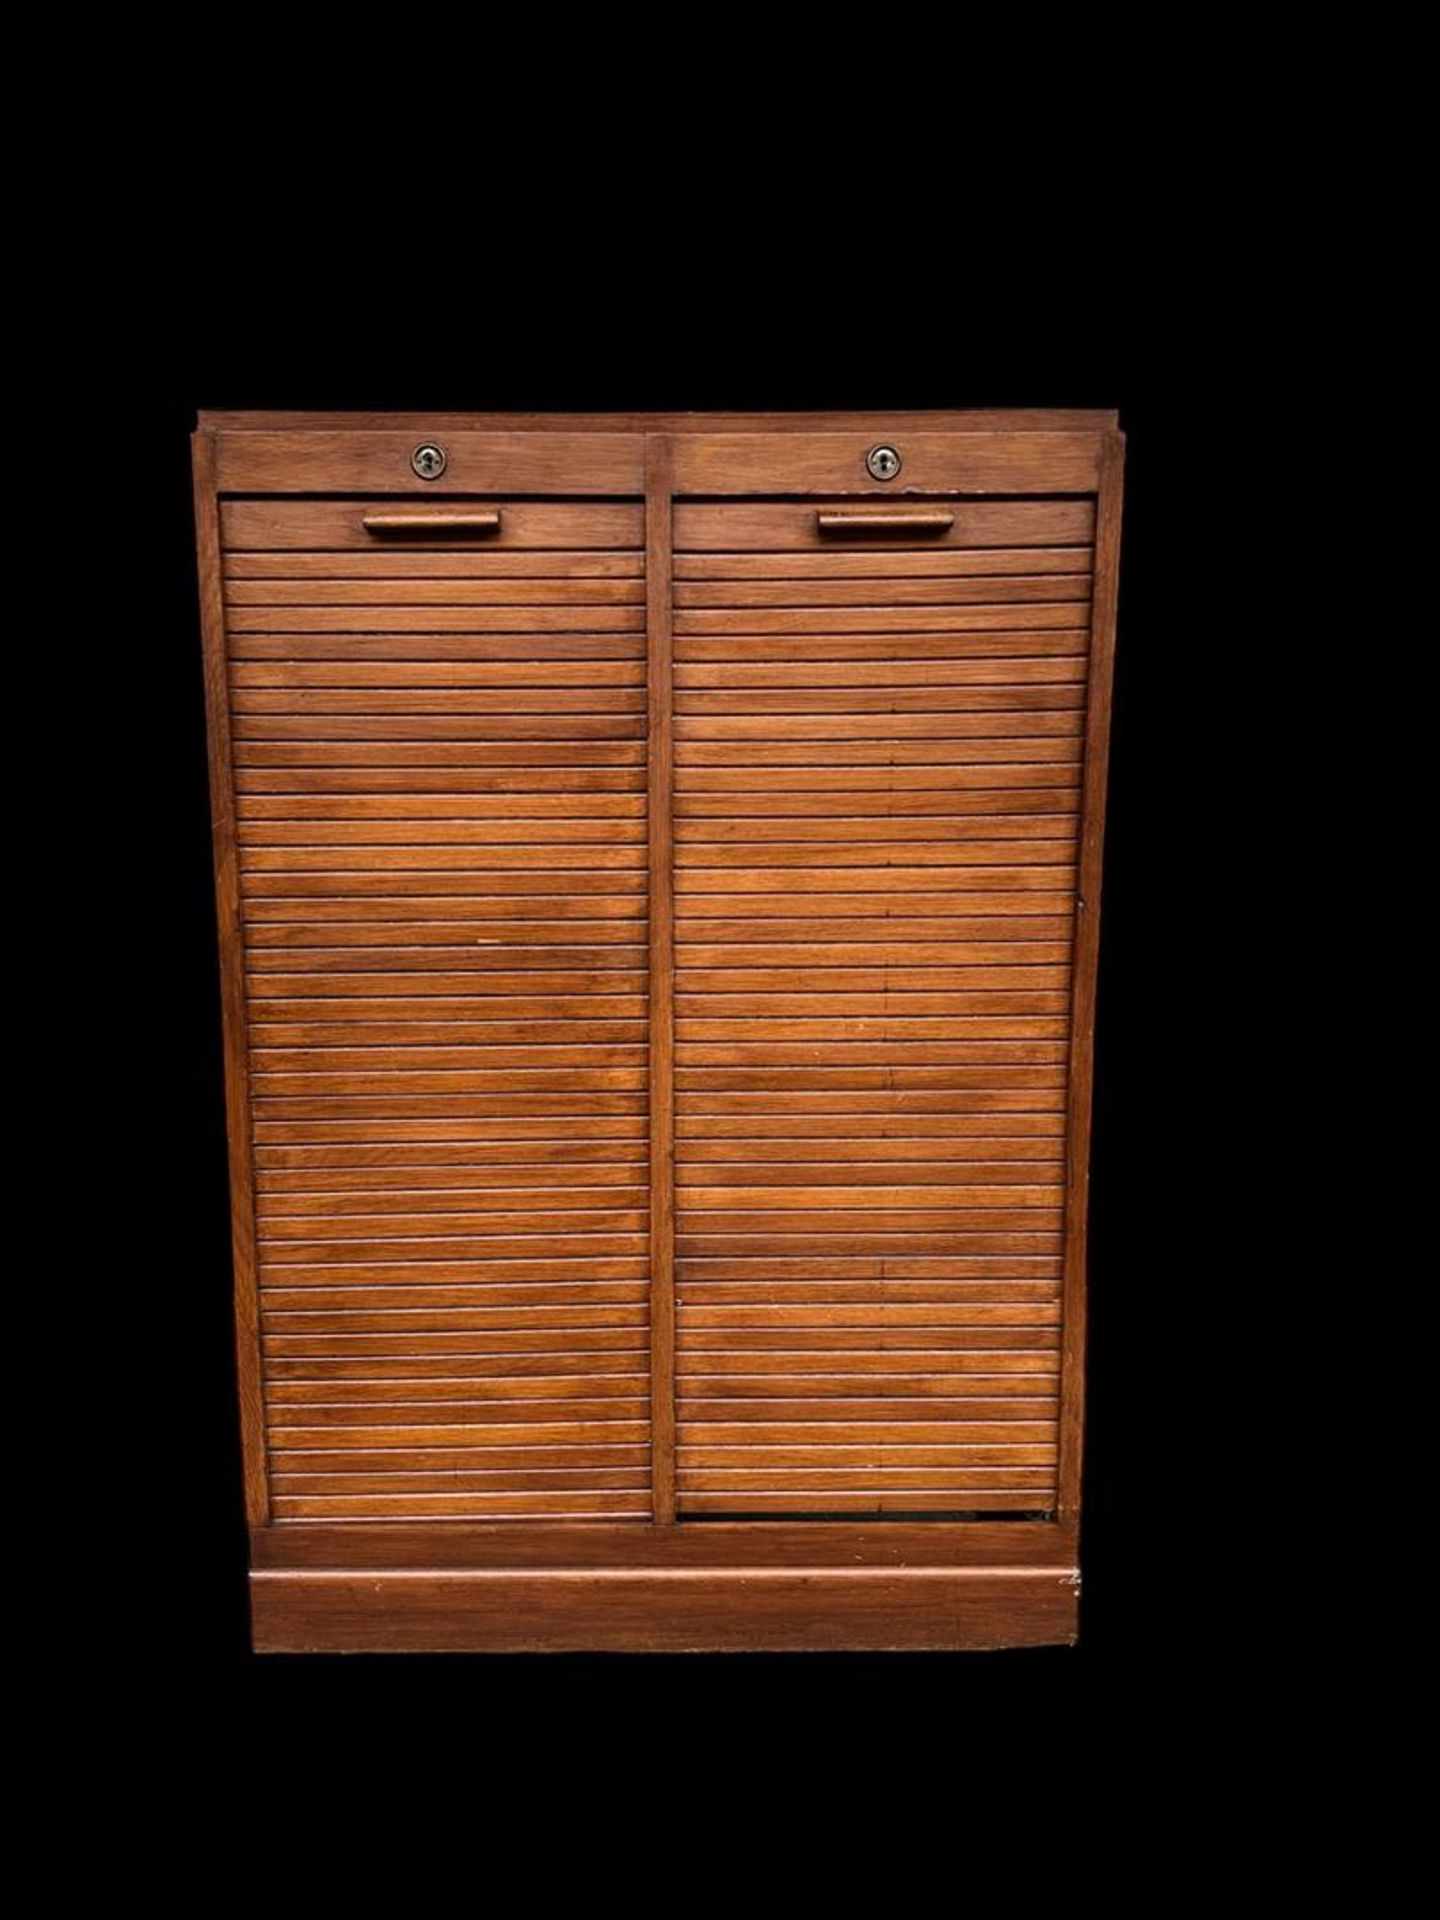 An oak filing cabinet with roller doors, ca. 1930.
120 x 34 x 82 cm.